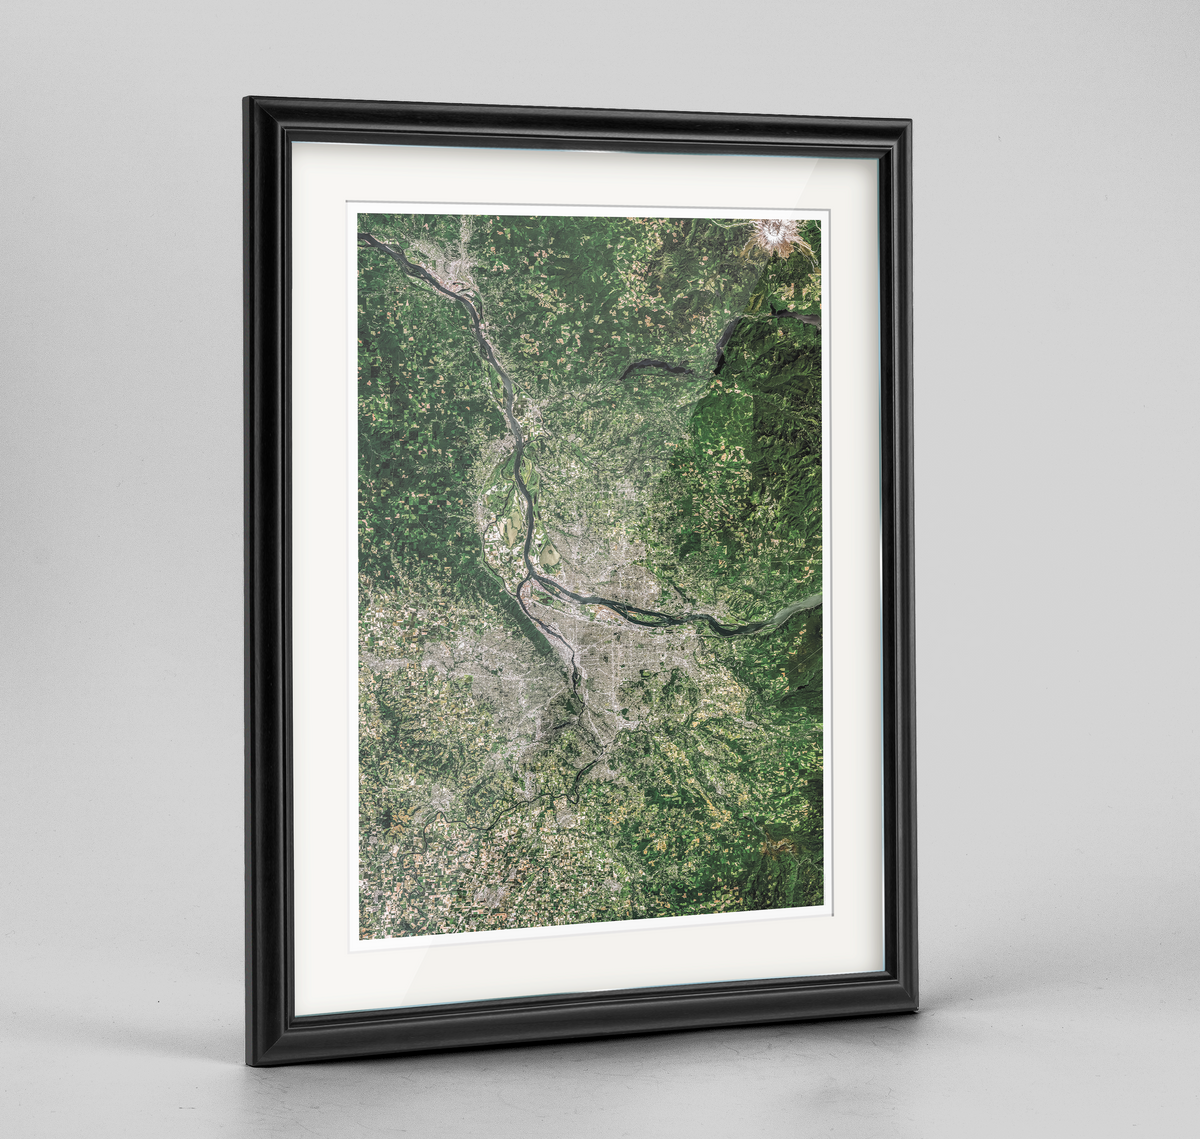 Portland Earth Photography Art Print - Framed